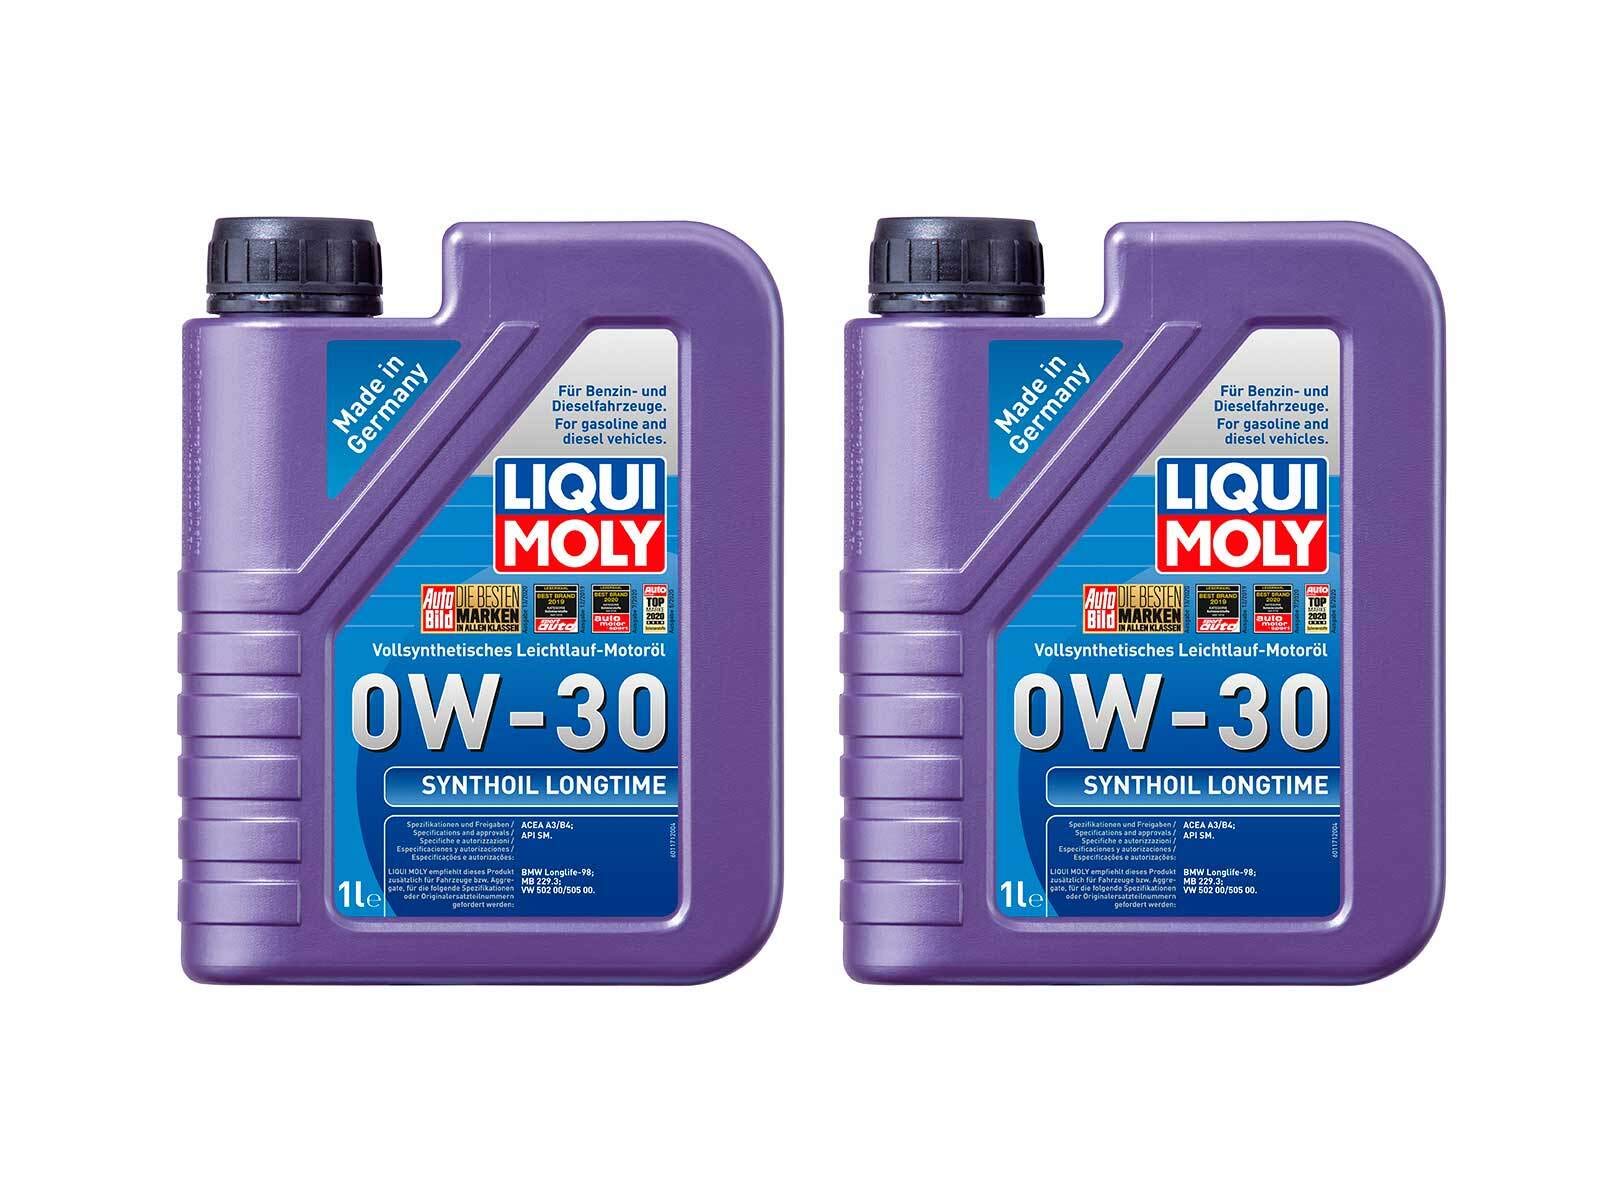 ILODA 2X Original Liqui Moly 1L Synthoil Longtime 0W-30 Motoröl Motorenöl Öl Oil 1171 von ILODA